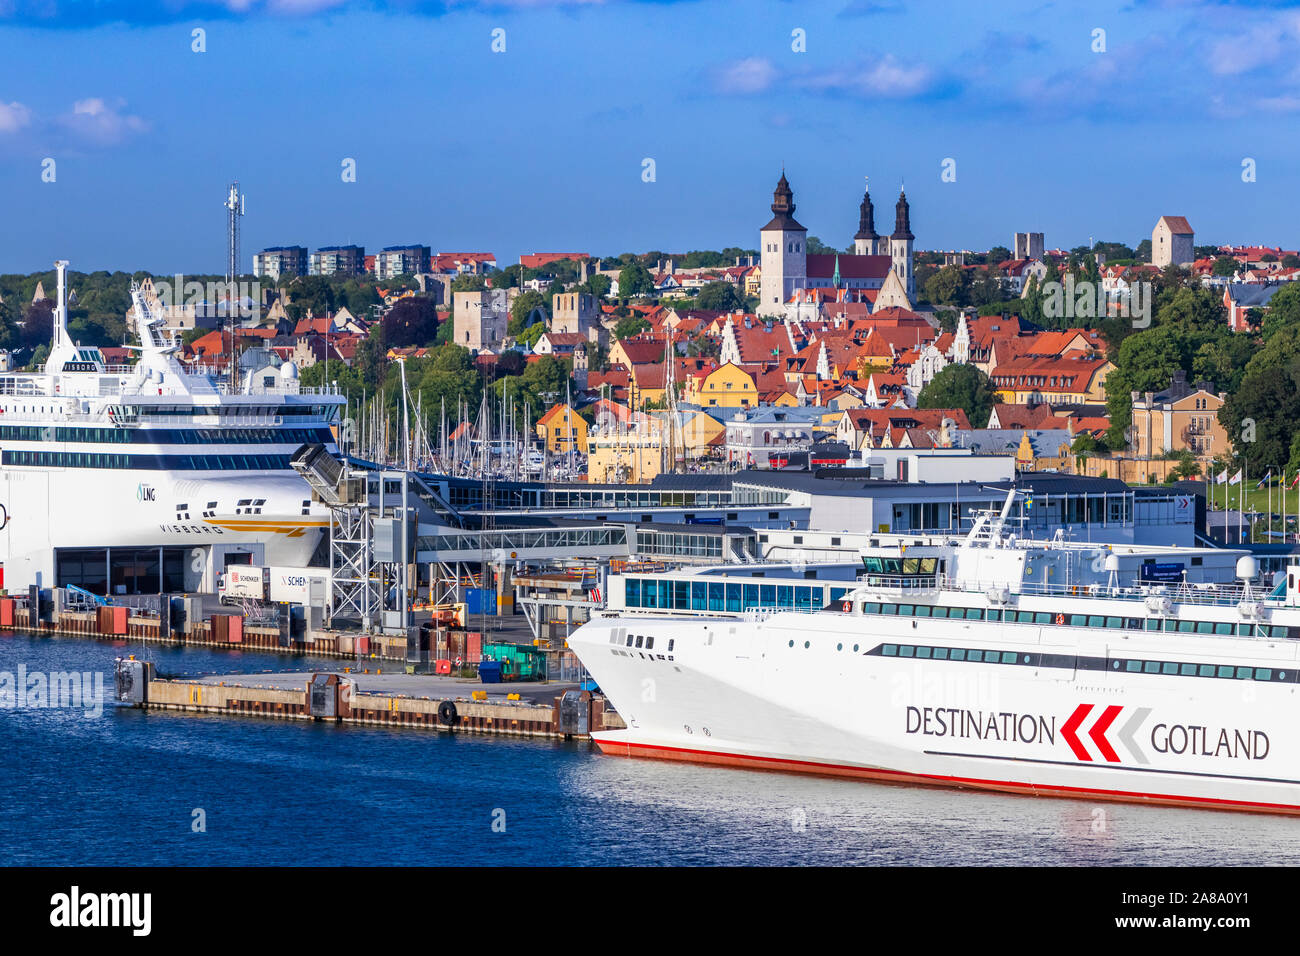 Destination Gotland ferries docked at Visby, Sweden Stock Photo - Alamy